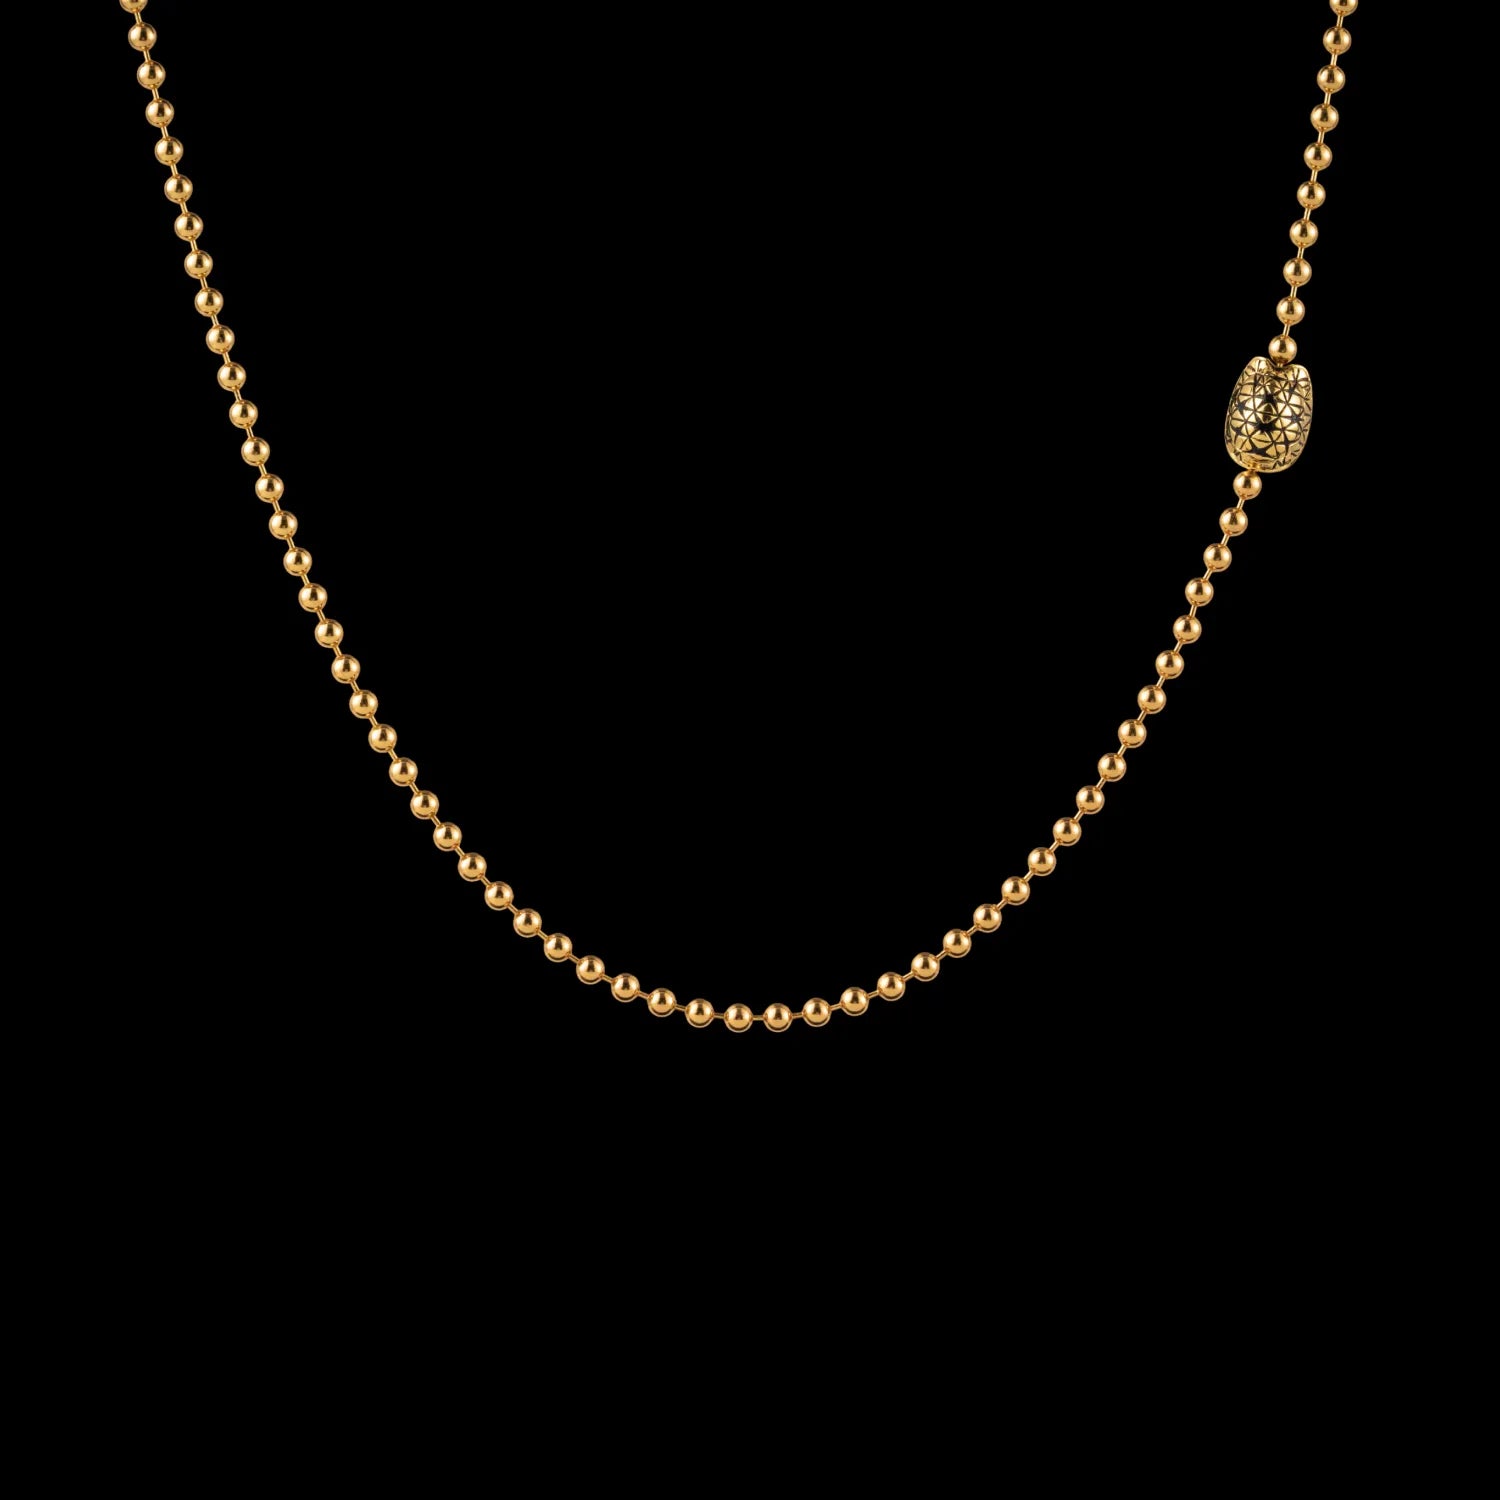 Star Tortoise Ball Chain Necklace - 4mm Gold Vermeil